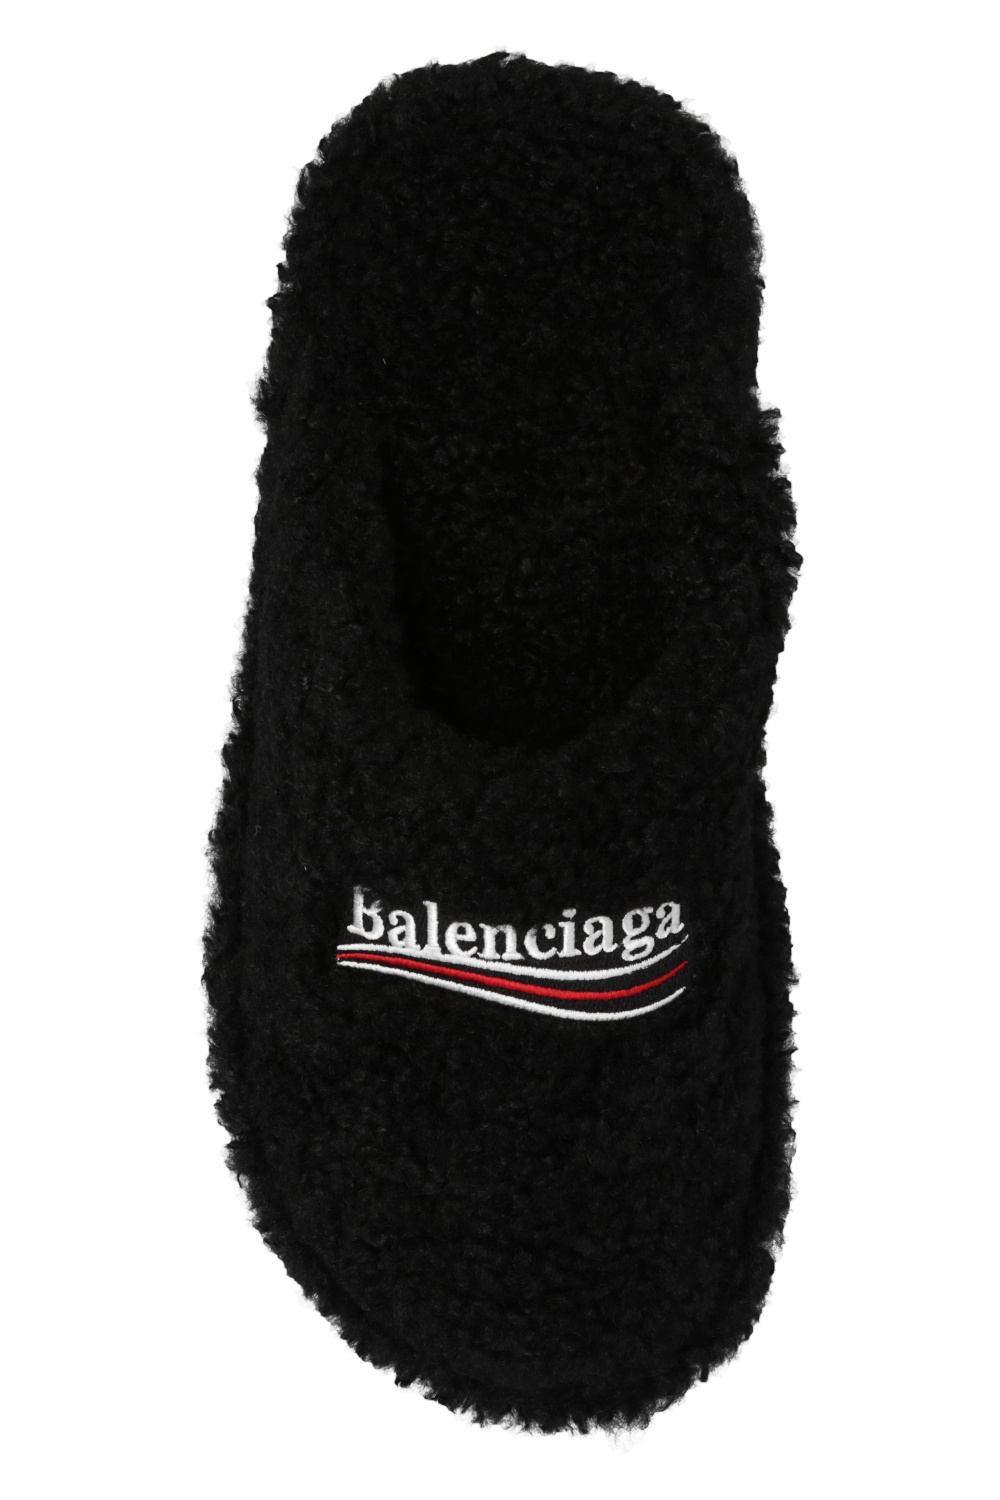 Balenciaga GANNI monk-strap creeper shoes